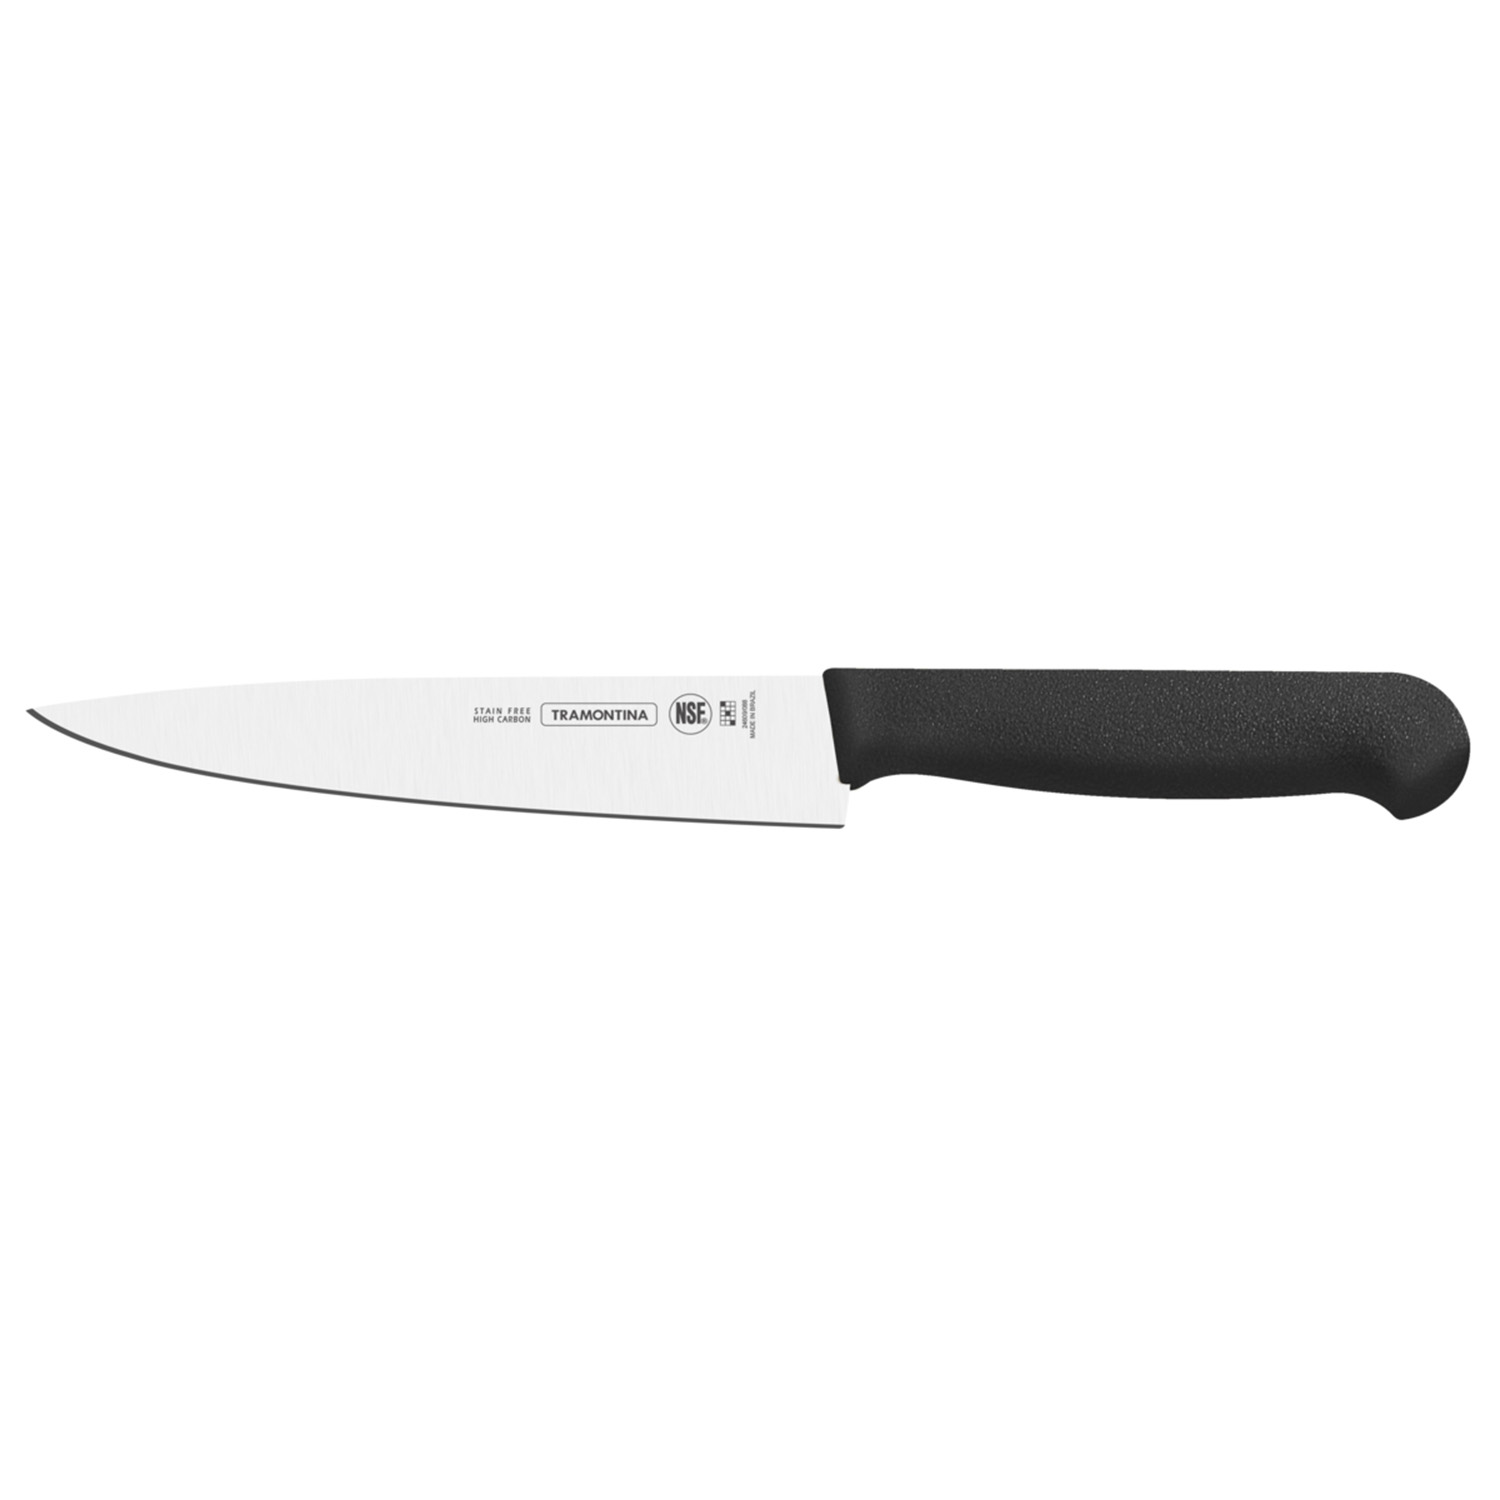 Нож Professional Master 254мм/387мм черный